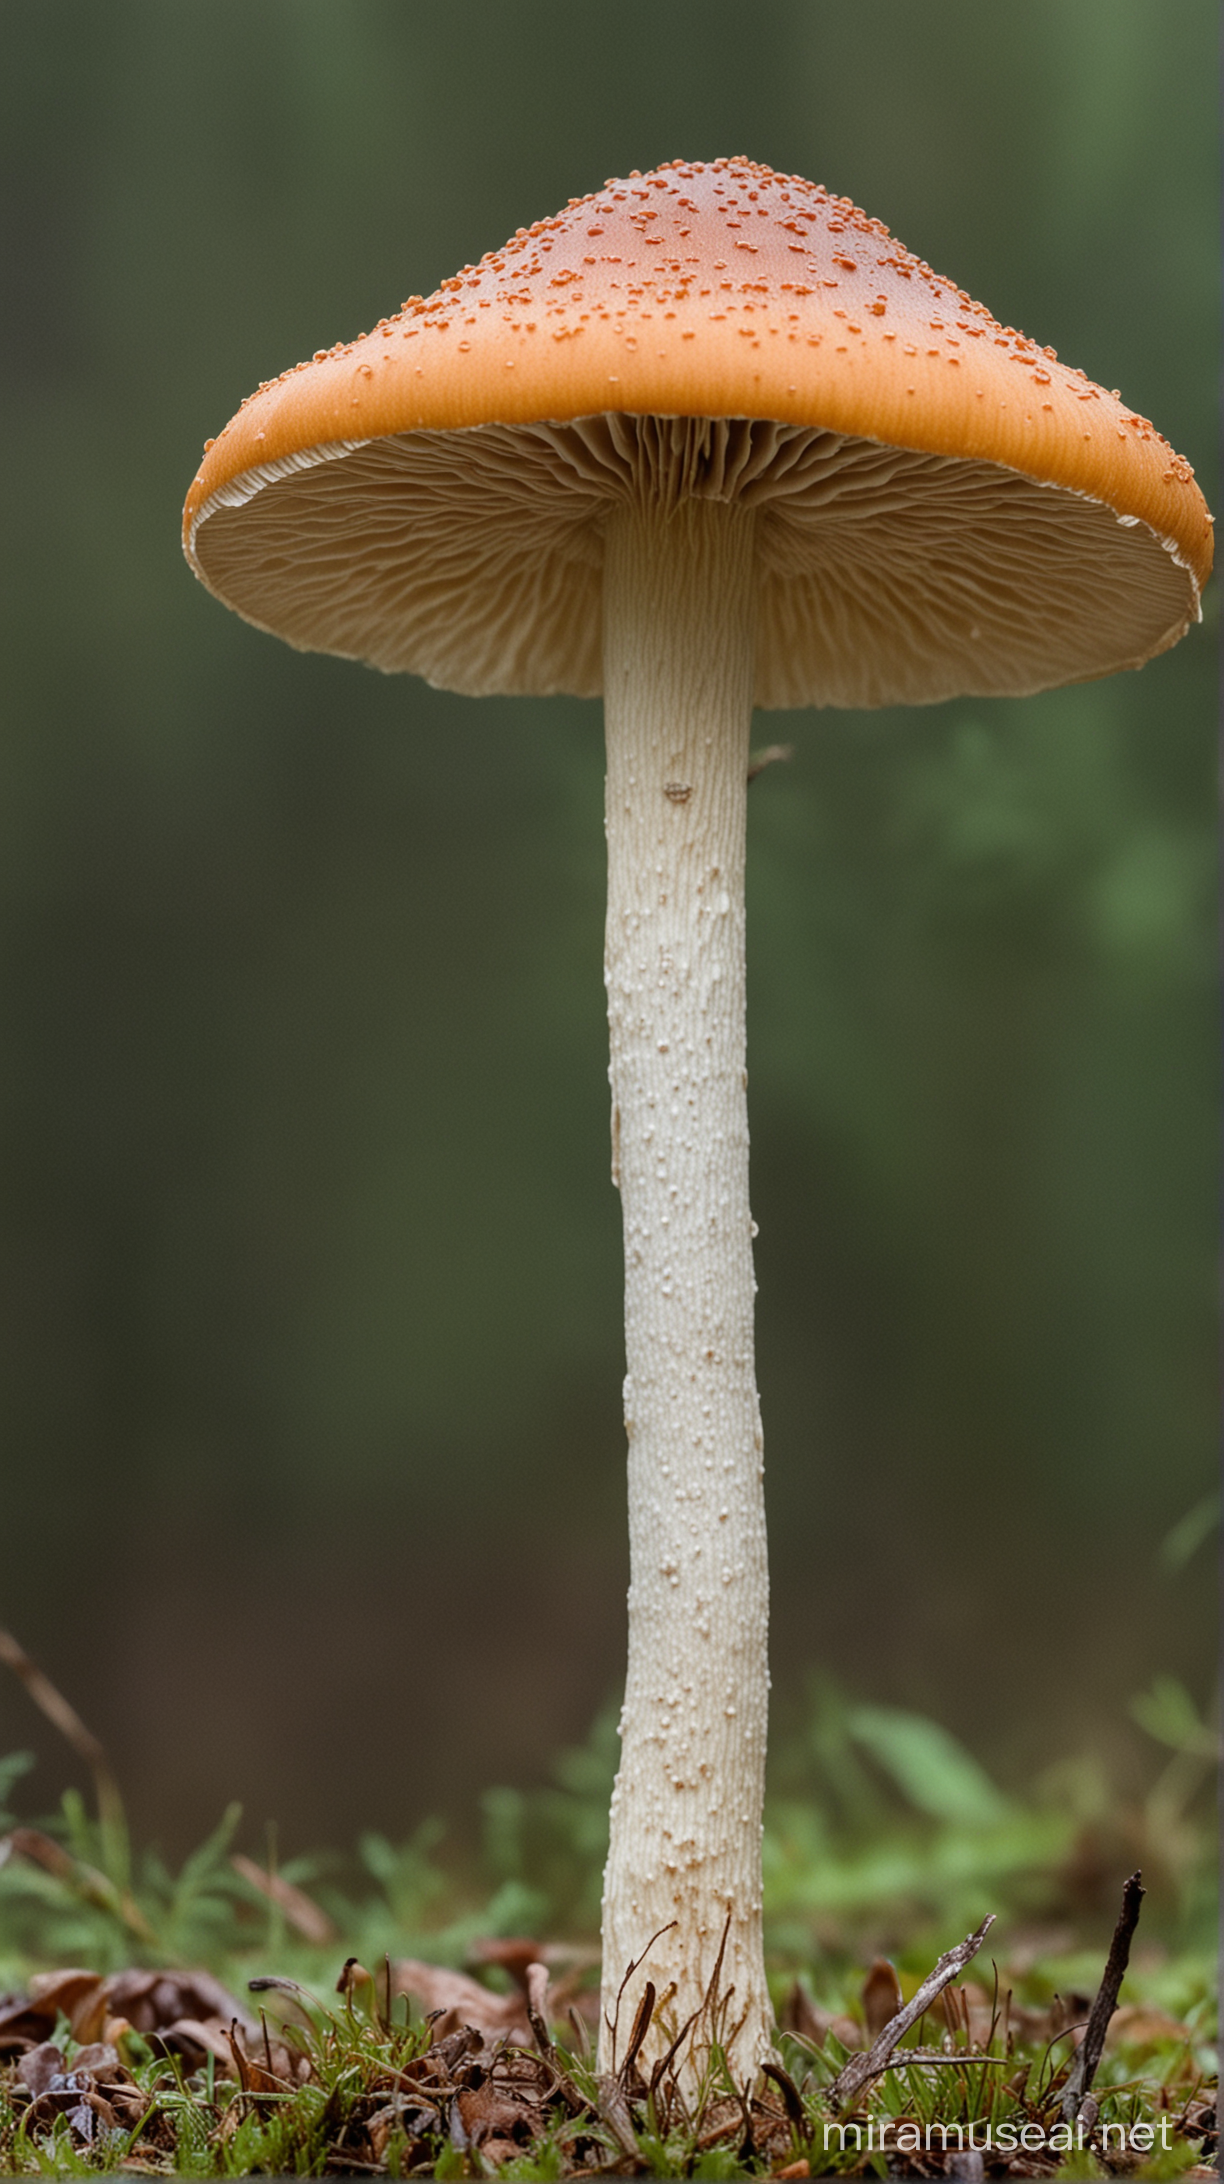 Enchanting Forest Mushroom Vibrant Fungi Amidst Lush Greenery